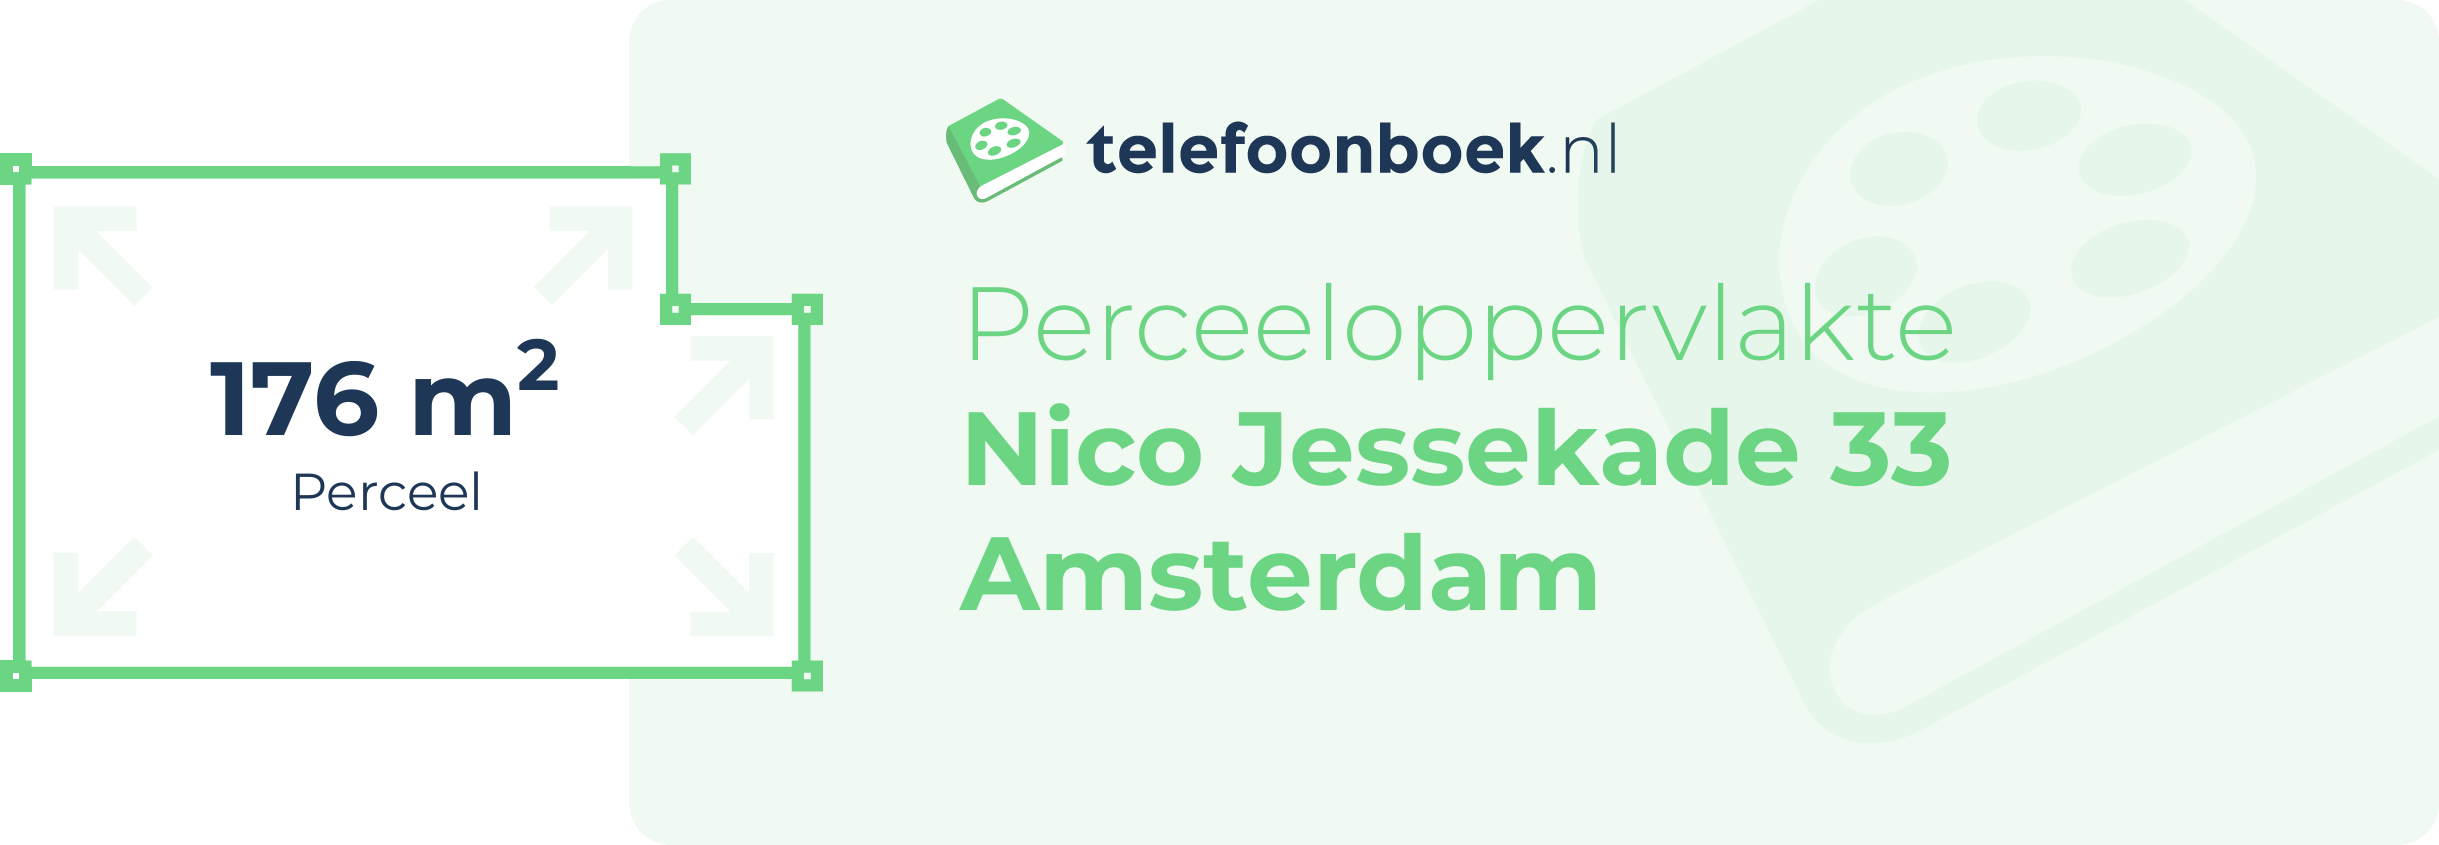 Perceeloppervlakte Nico Jessekade 33 Amsterdam